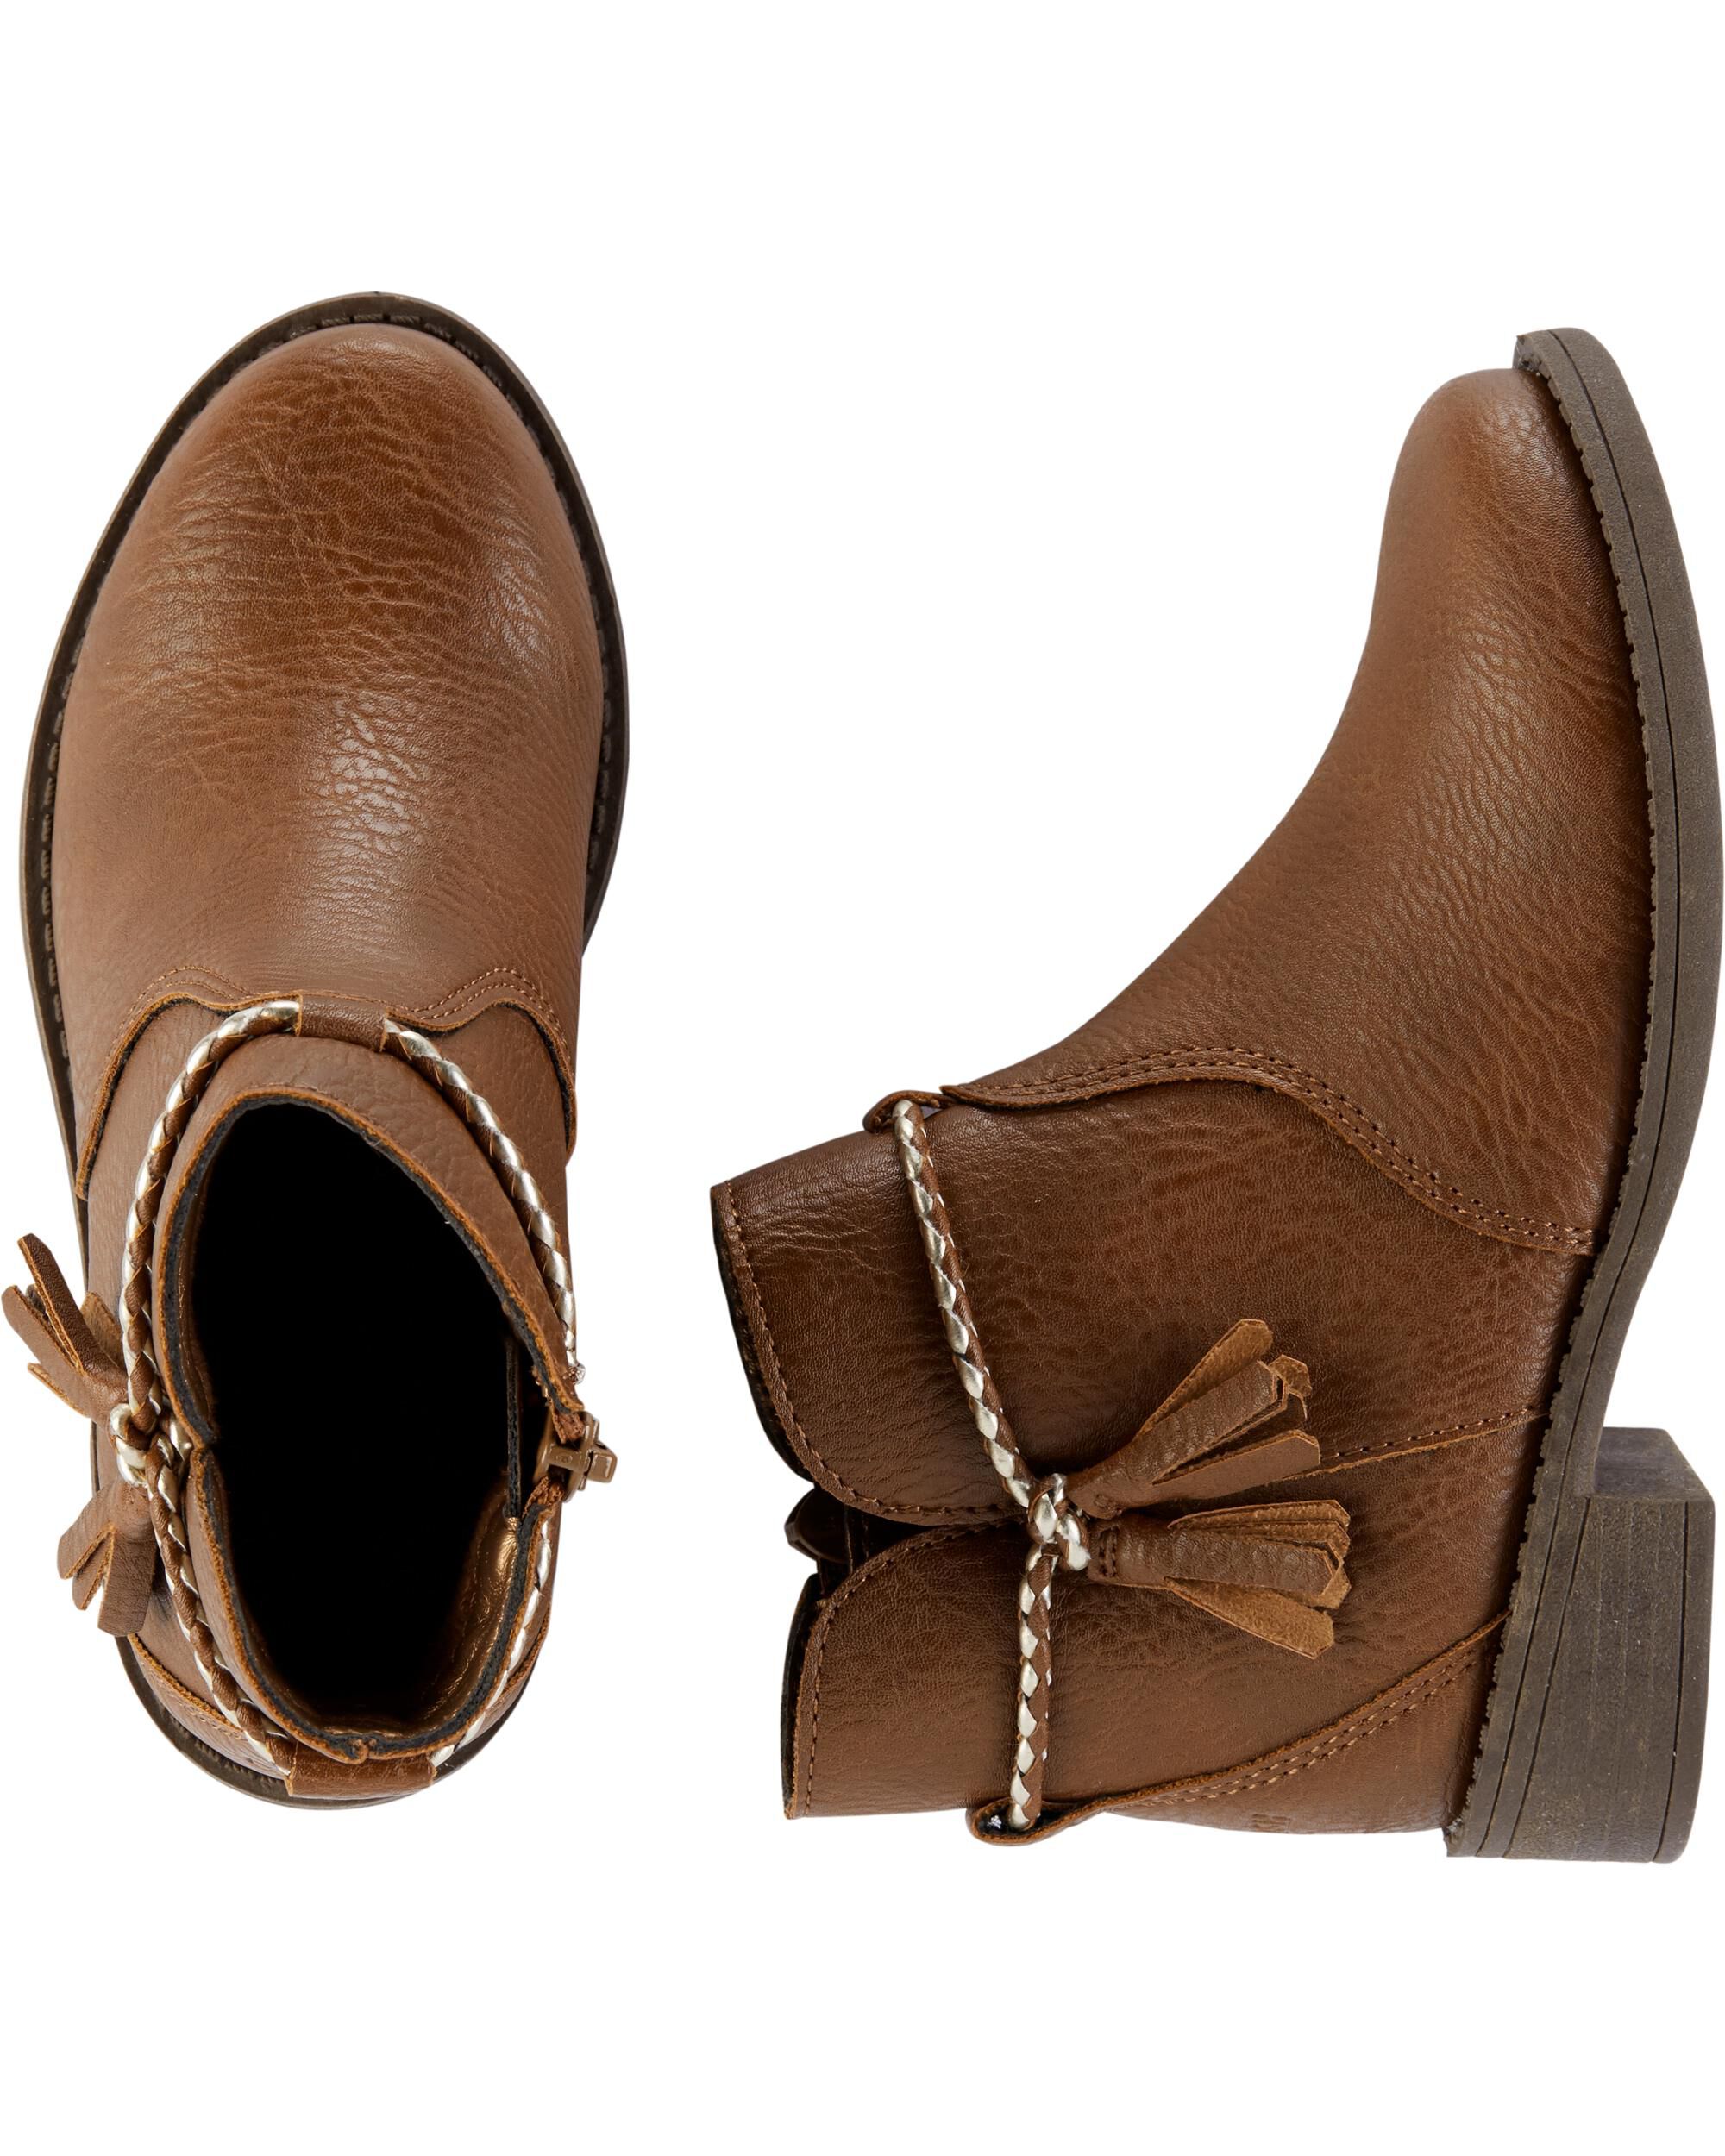 OshKosh Tassel Ankle Boots | carters.com